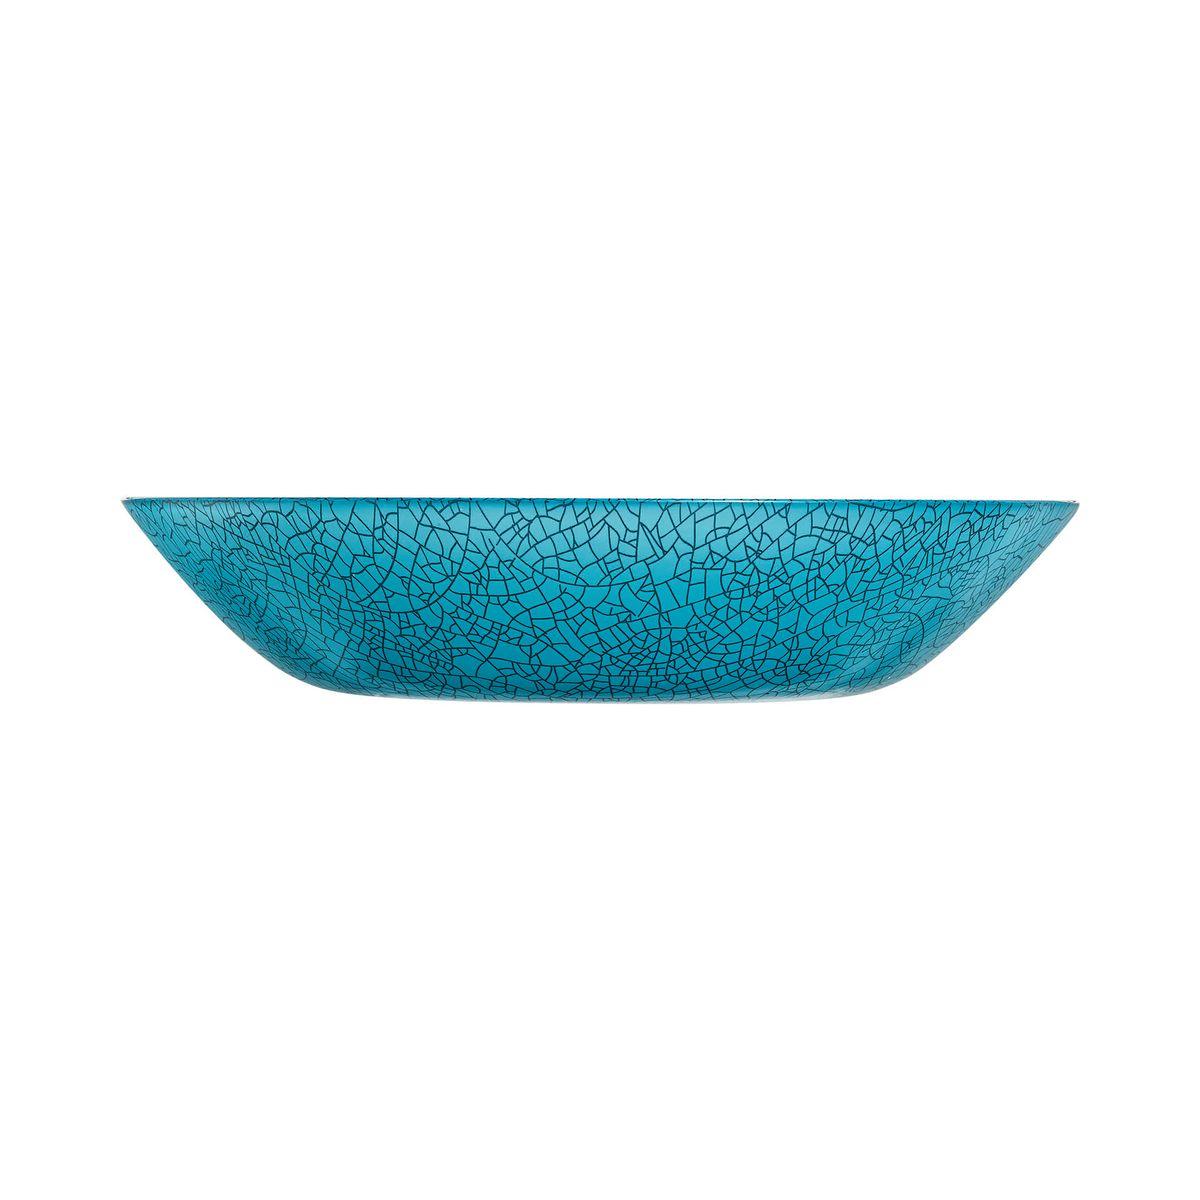 Assiette creuse bleue 20 cm Icy - Luminarc